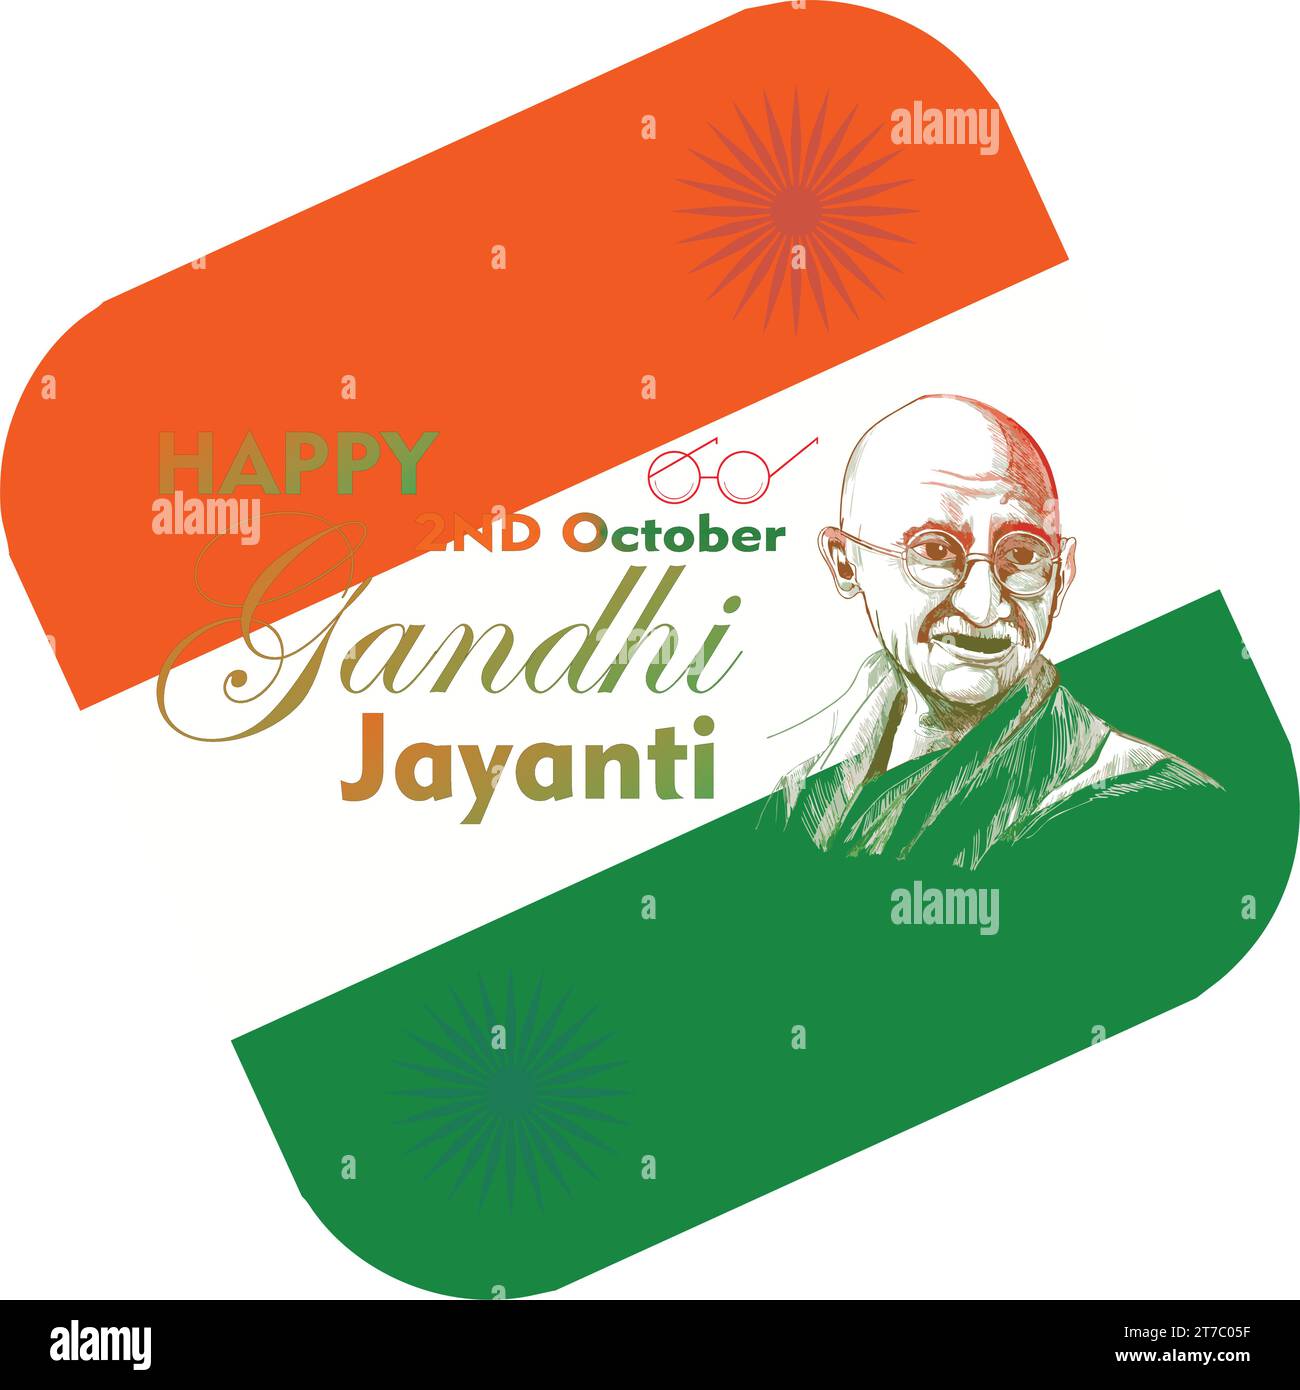 Happy Gandhi Jayanti 2nd October Stock Vector